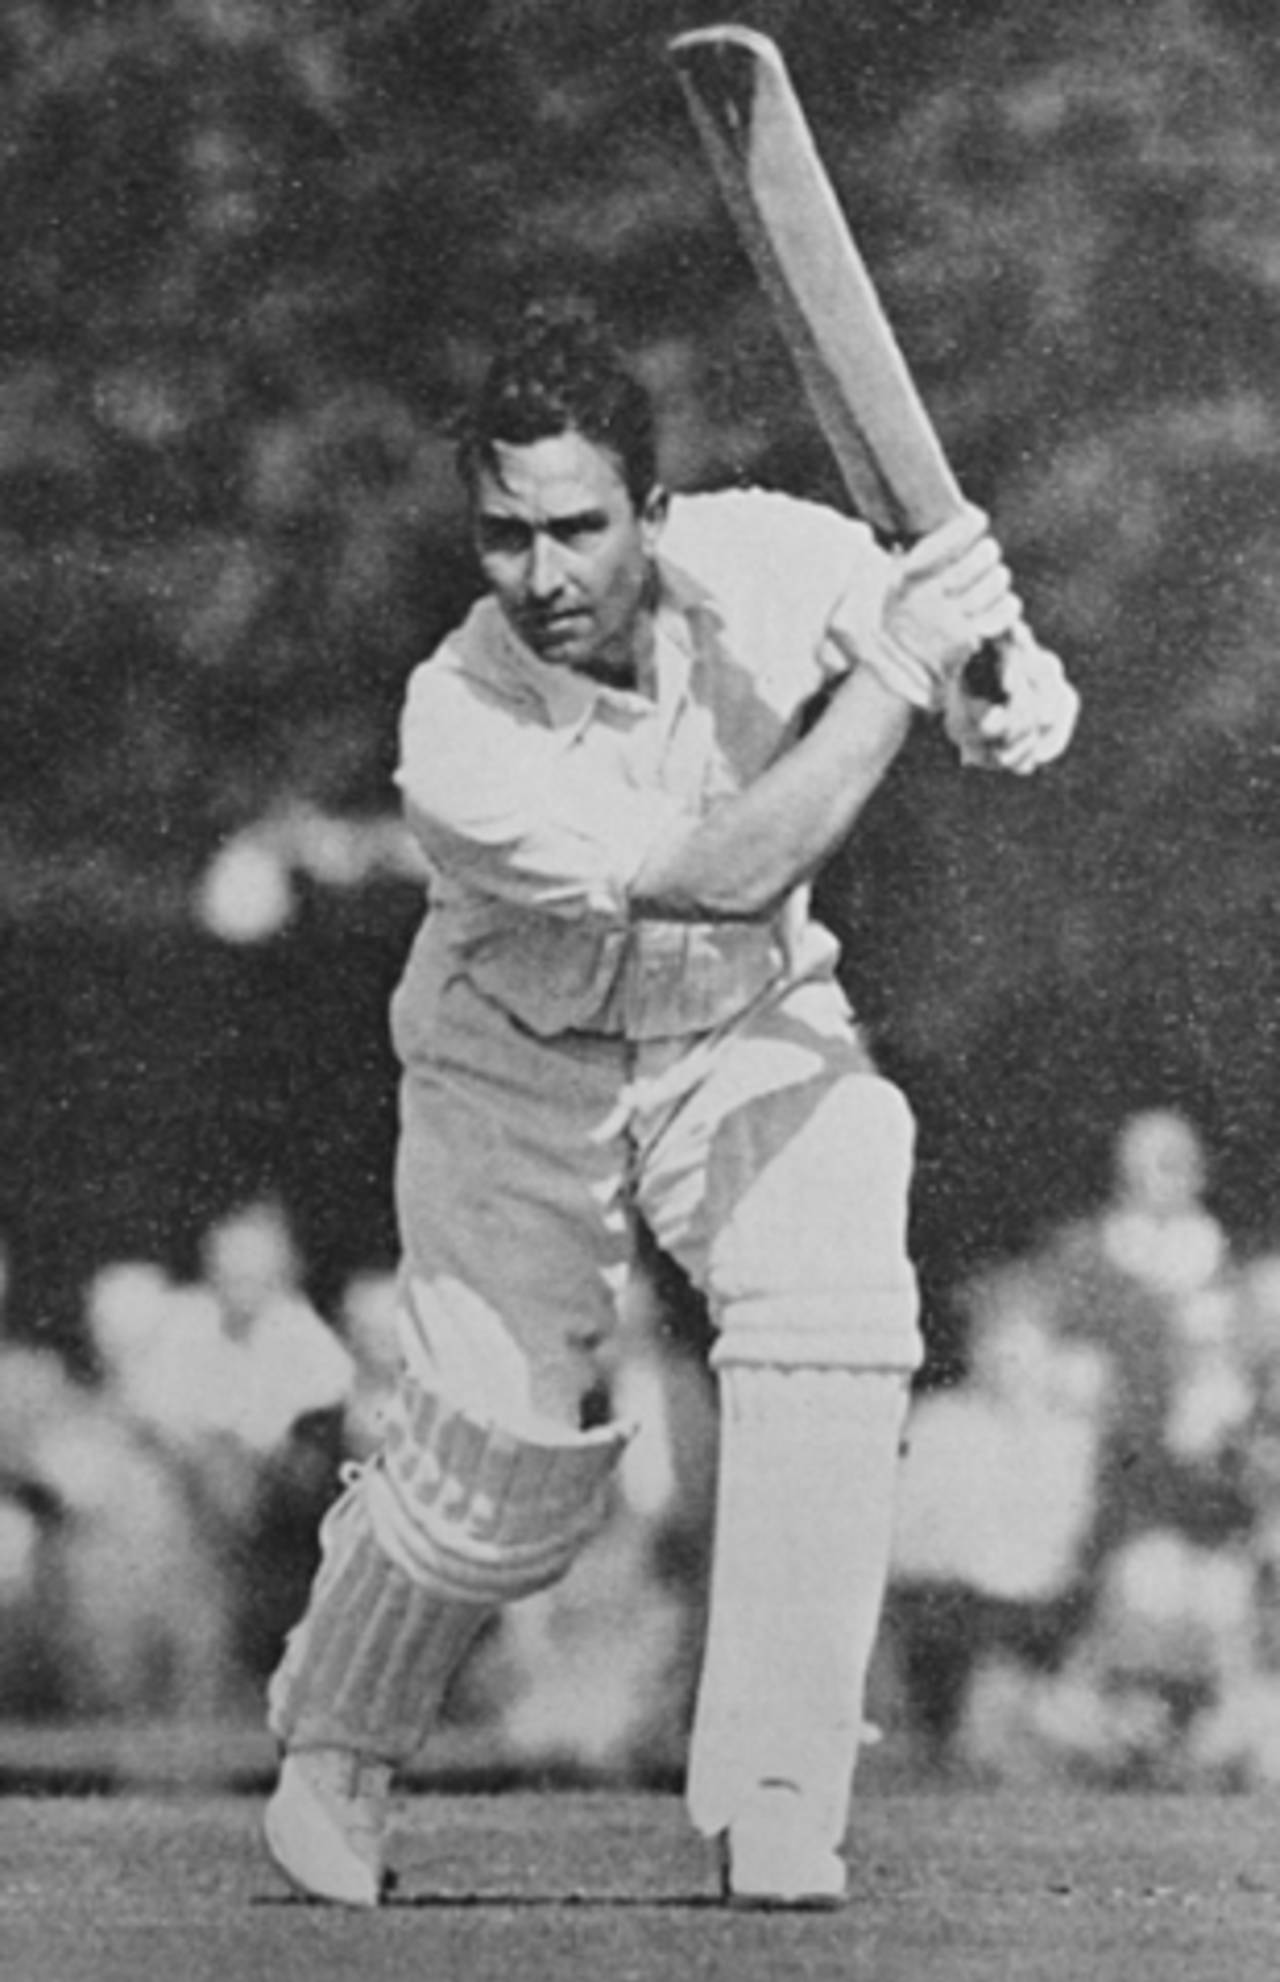 Denis Compton batting in 1951